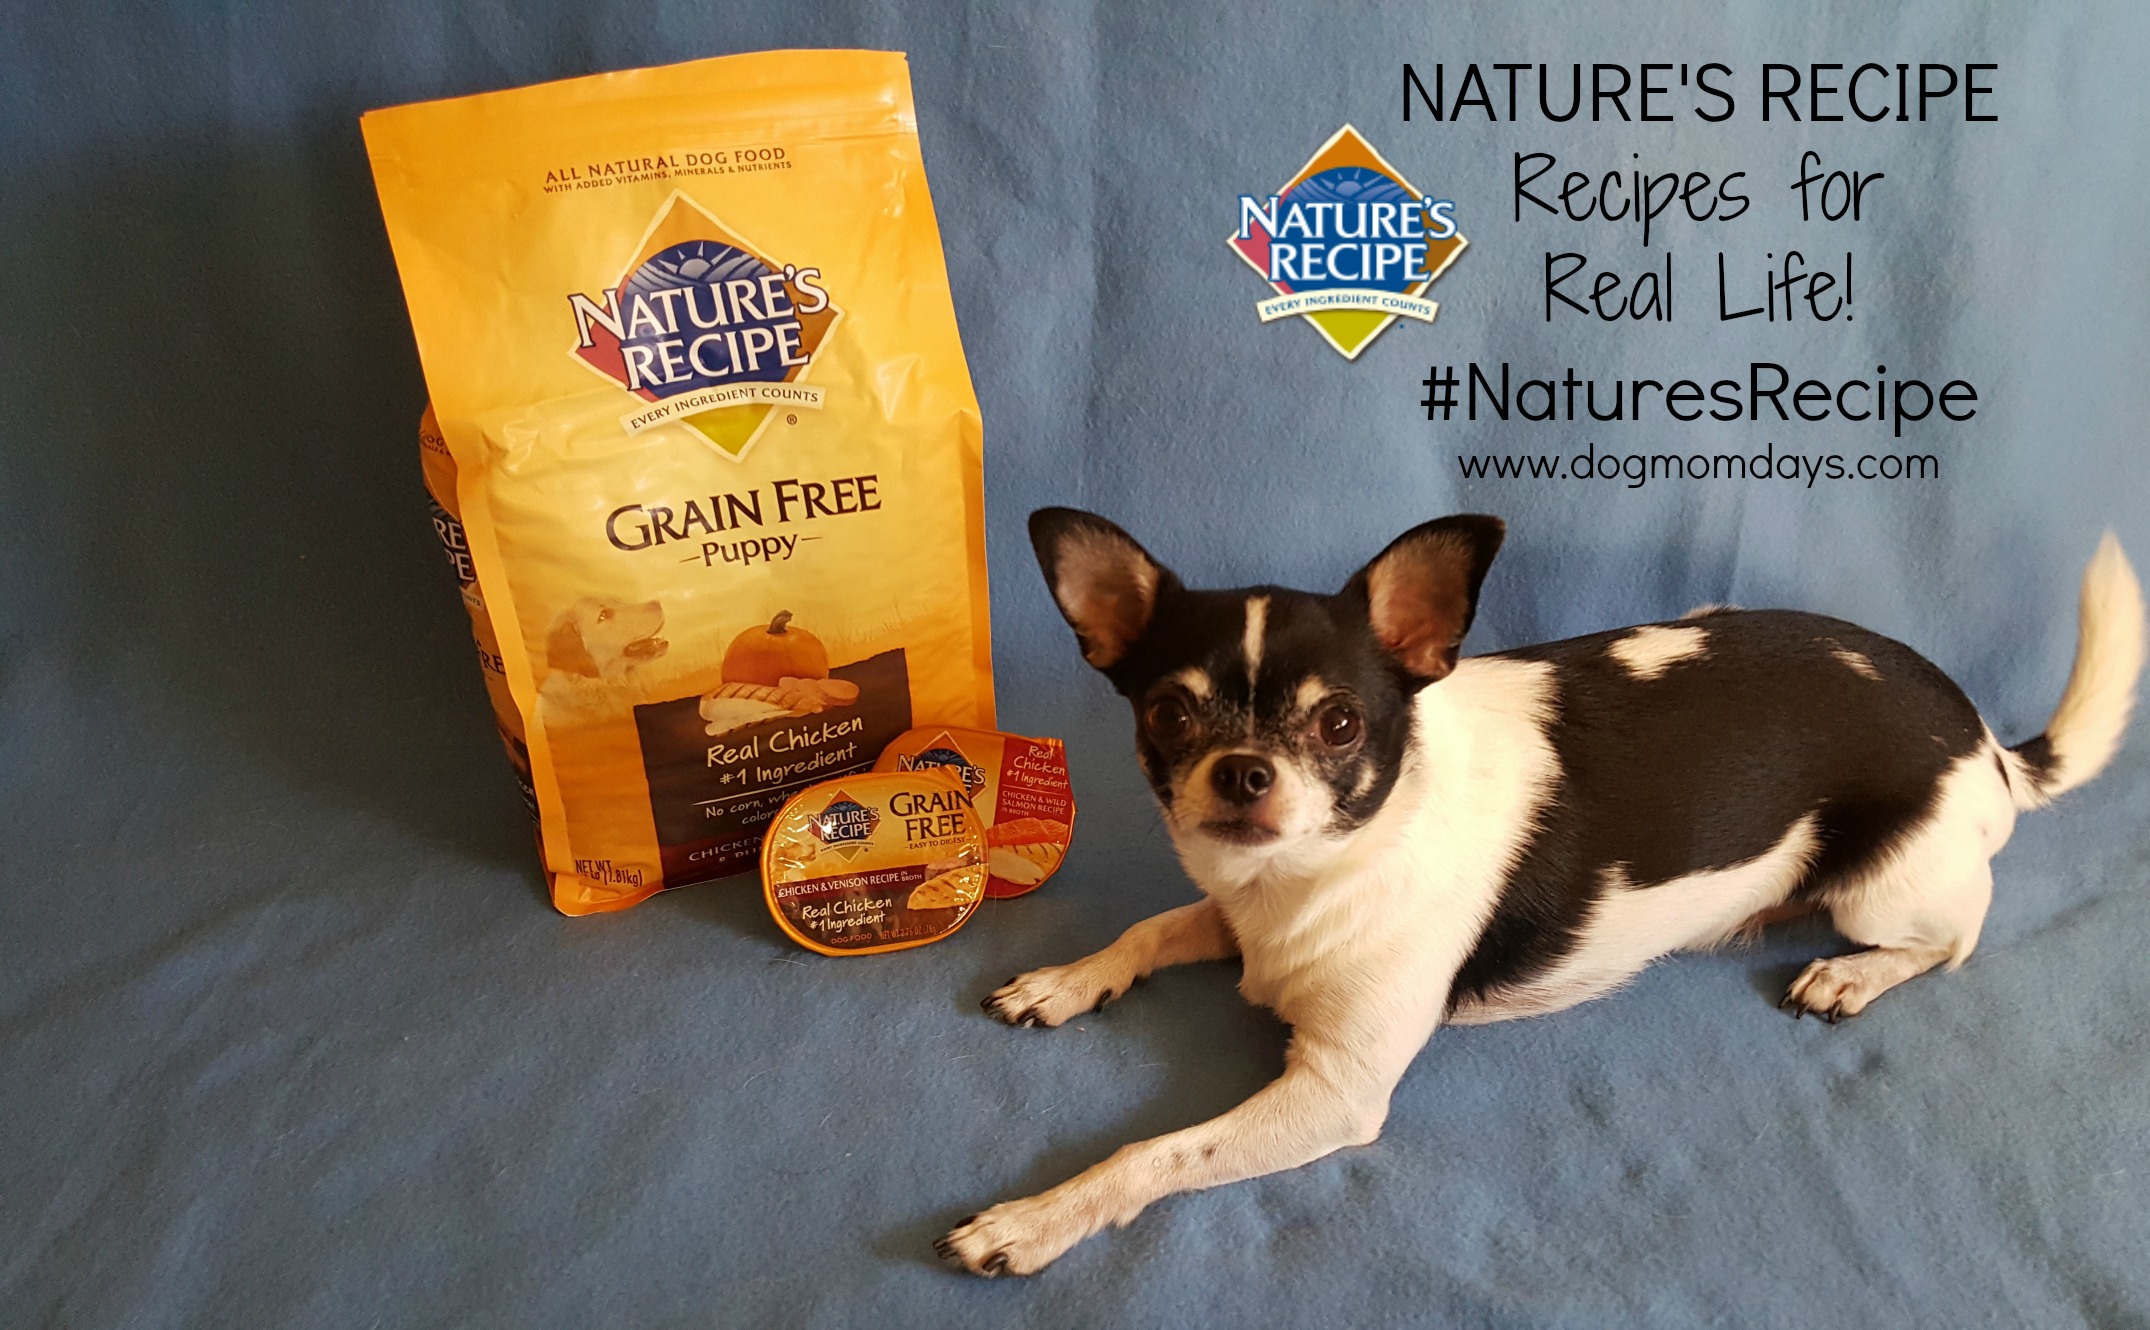 Nature's Recipe dog food #NaturesRecipe